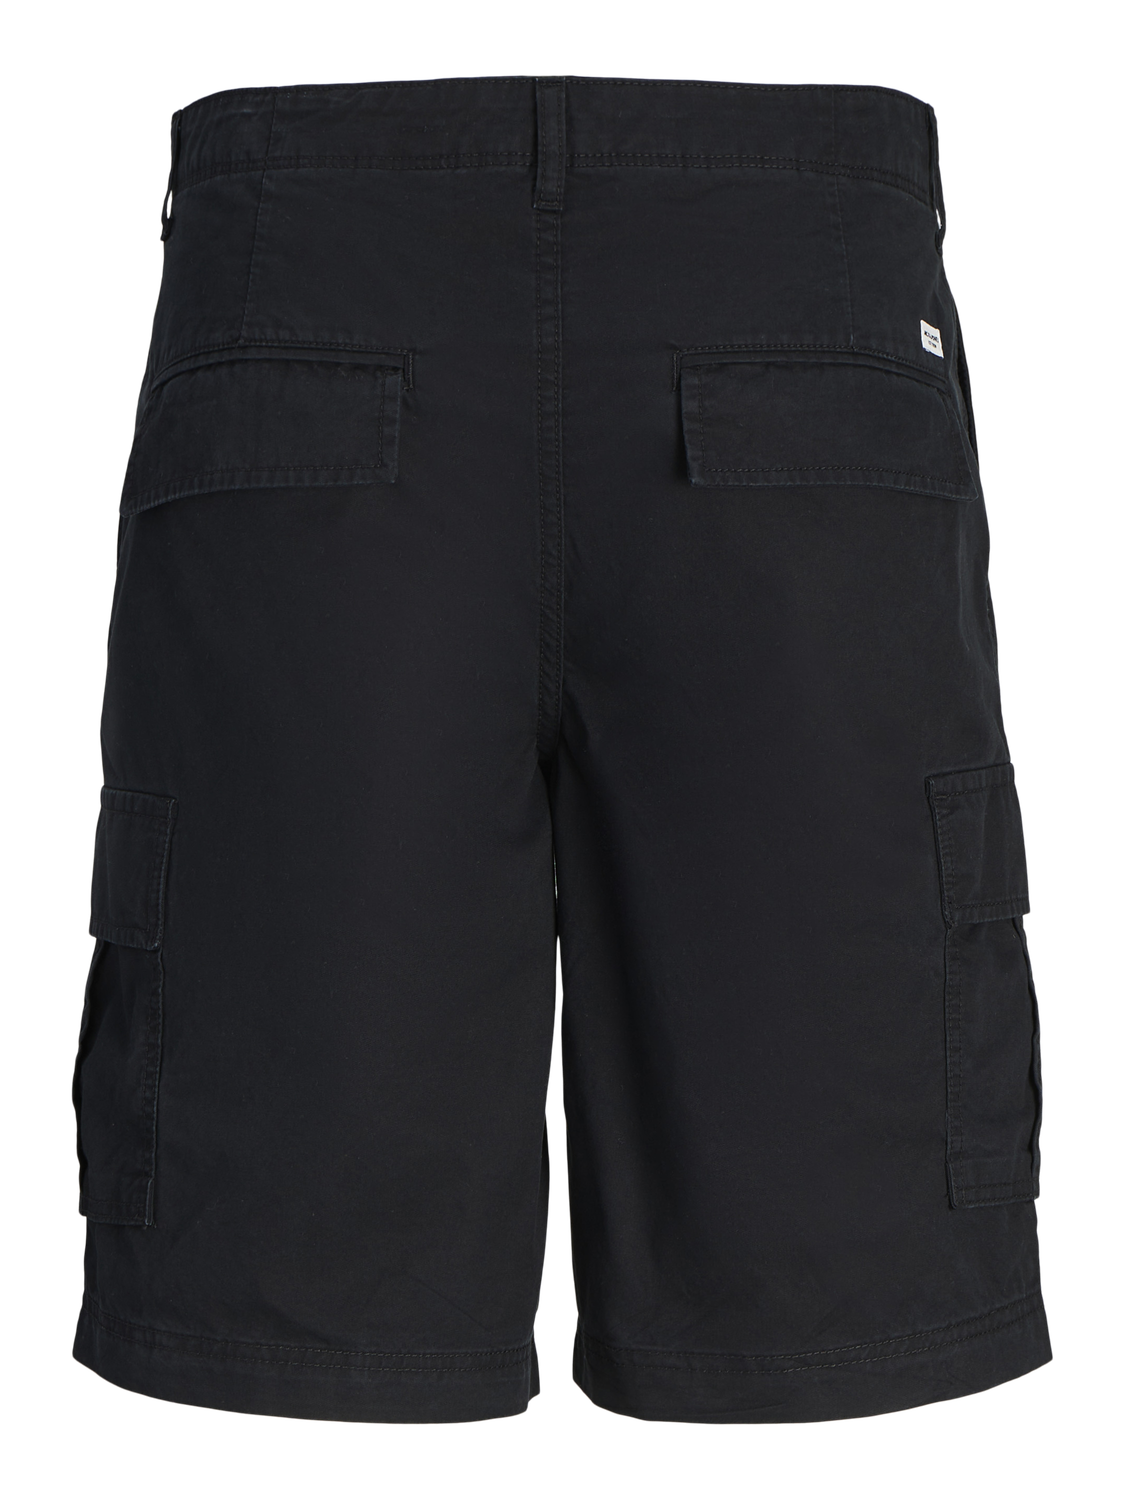 JPSTCOLE Shorts - Black